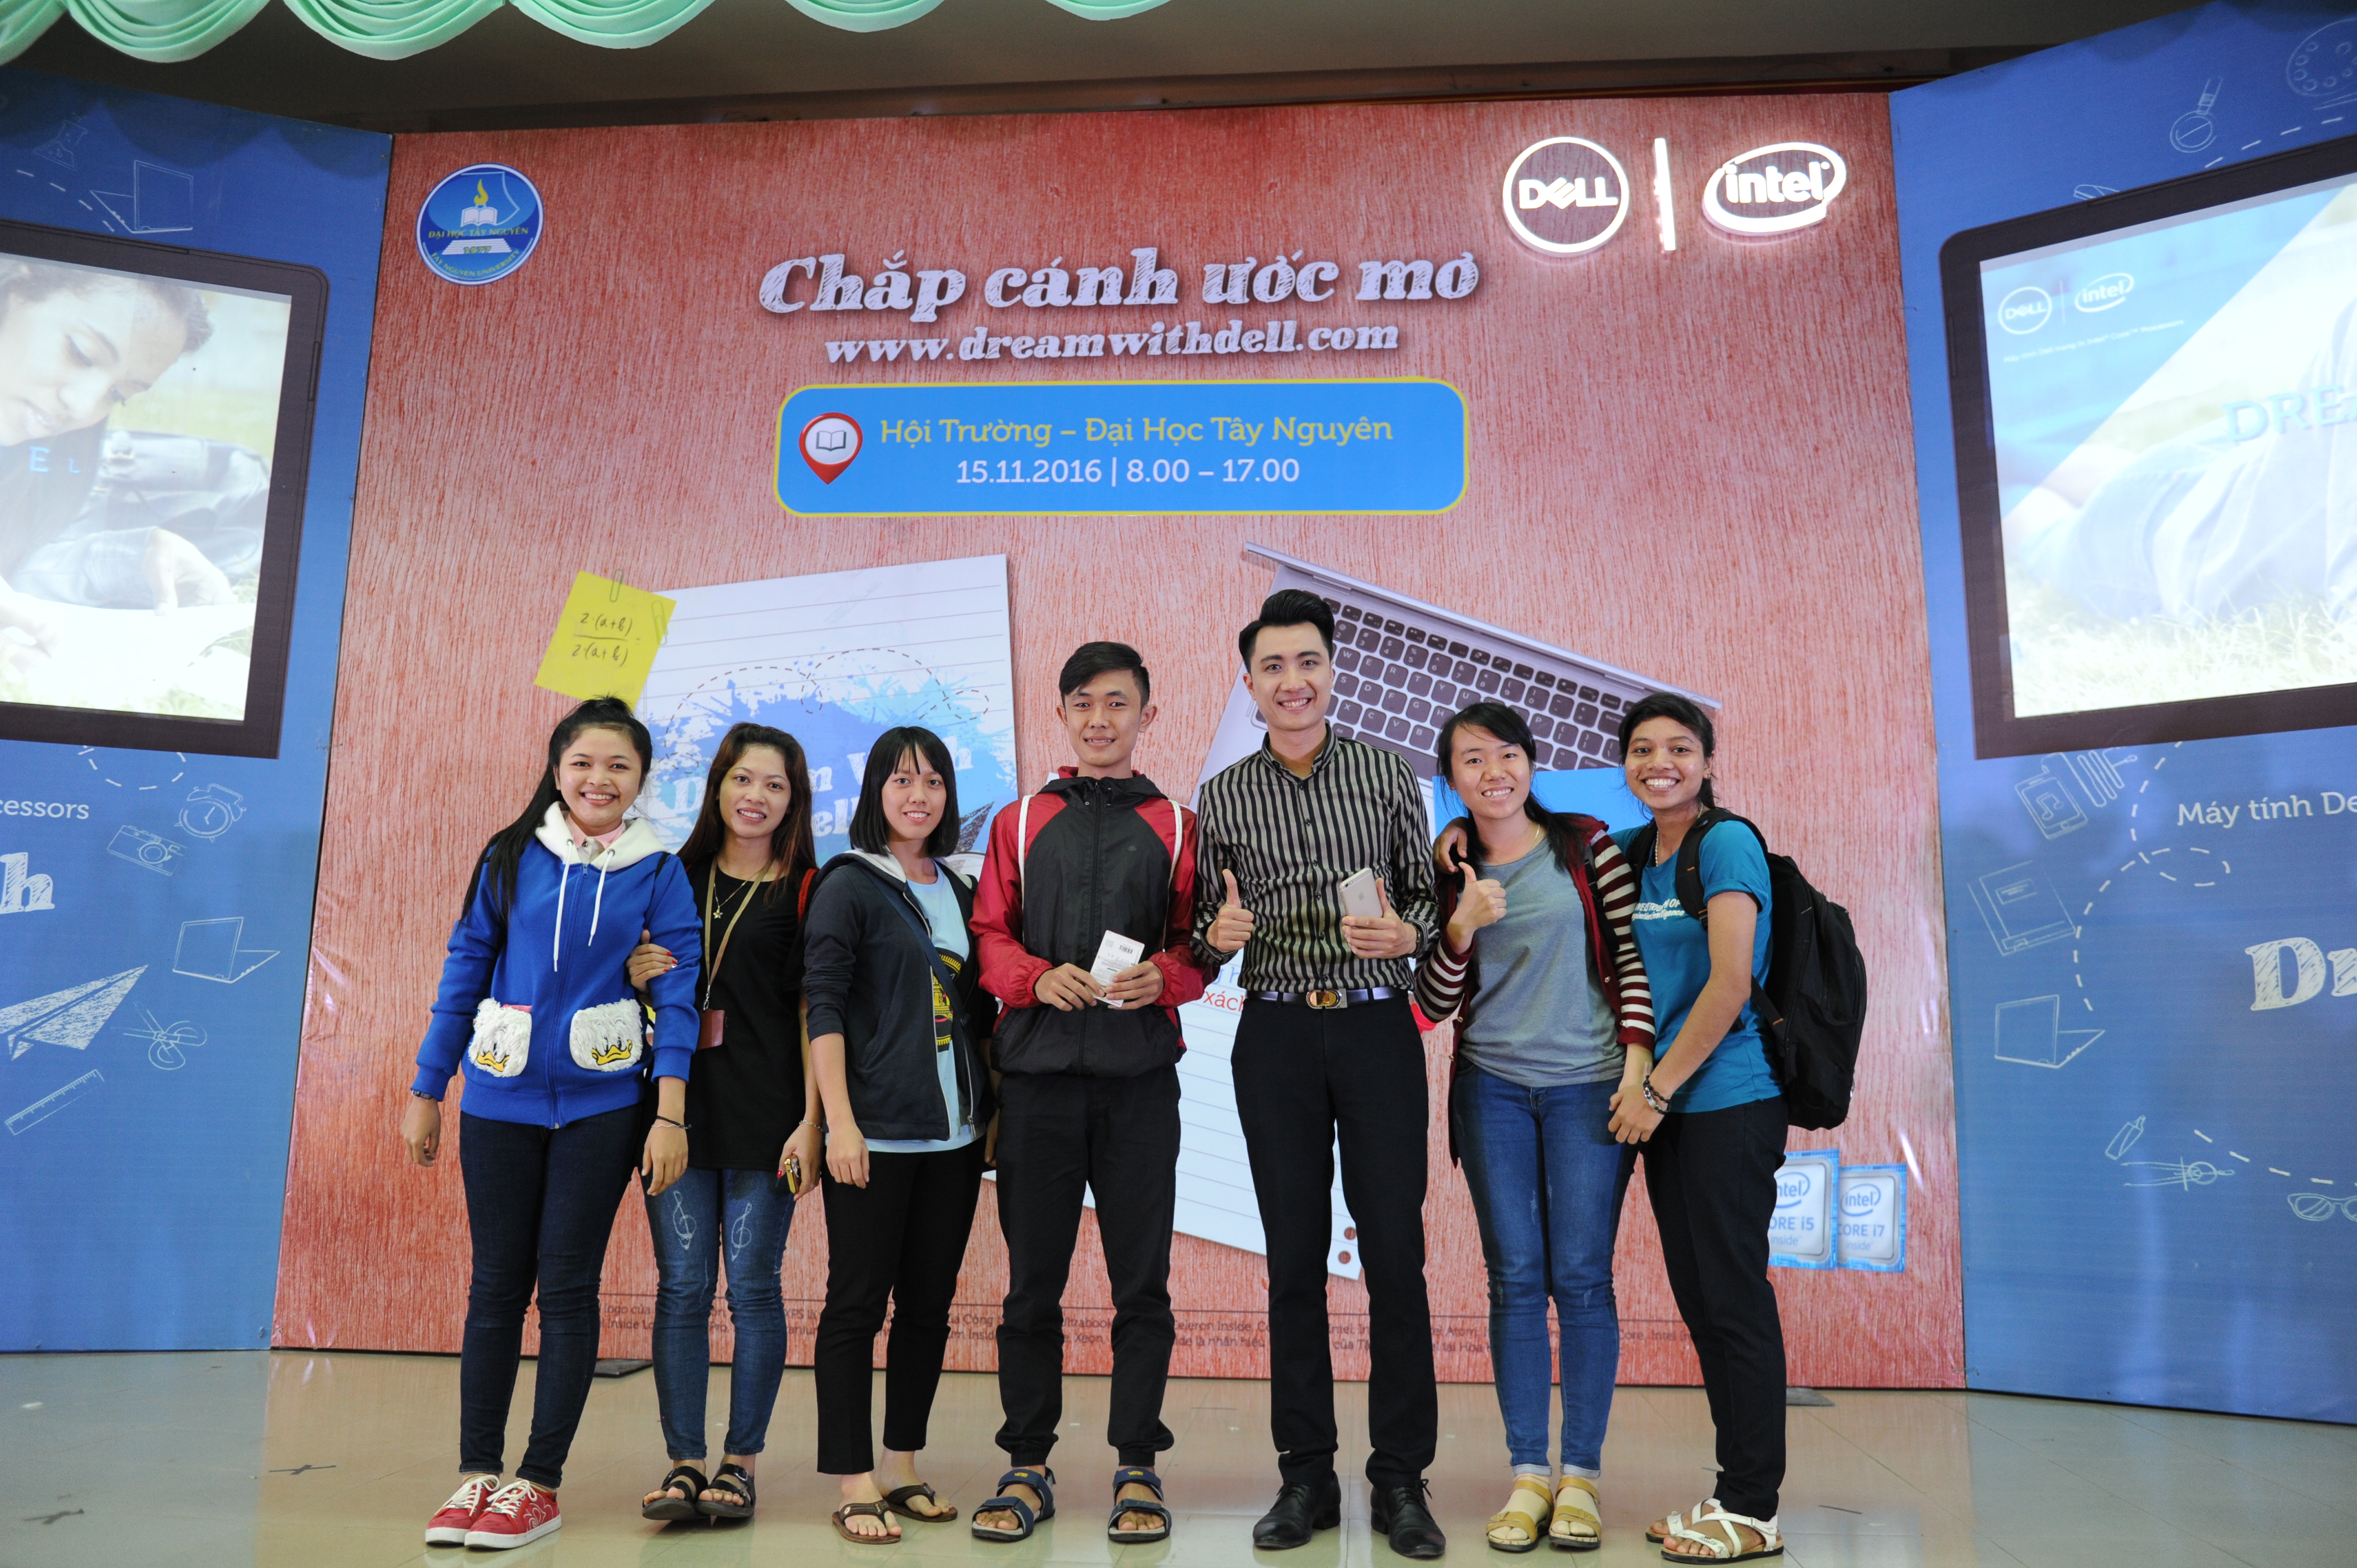 Dell trao tặng 125 laptop cho sinh viên toàn quốc trong chiến dịch Dream With Dell